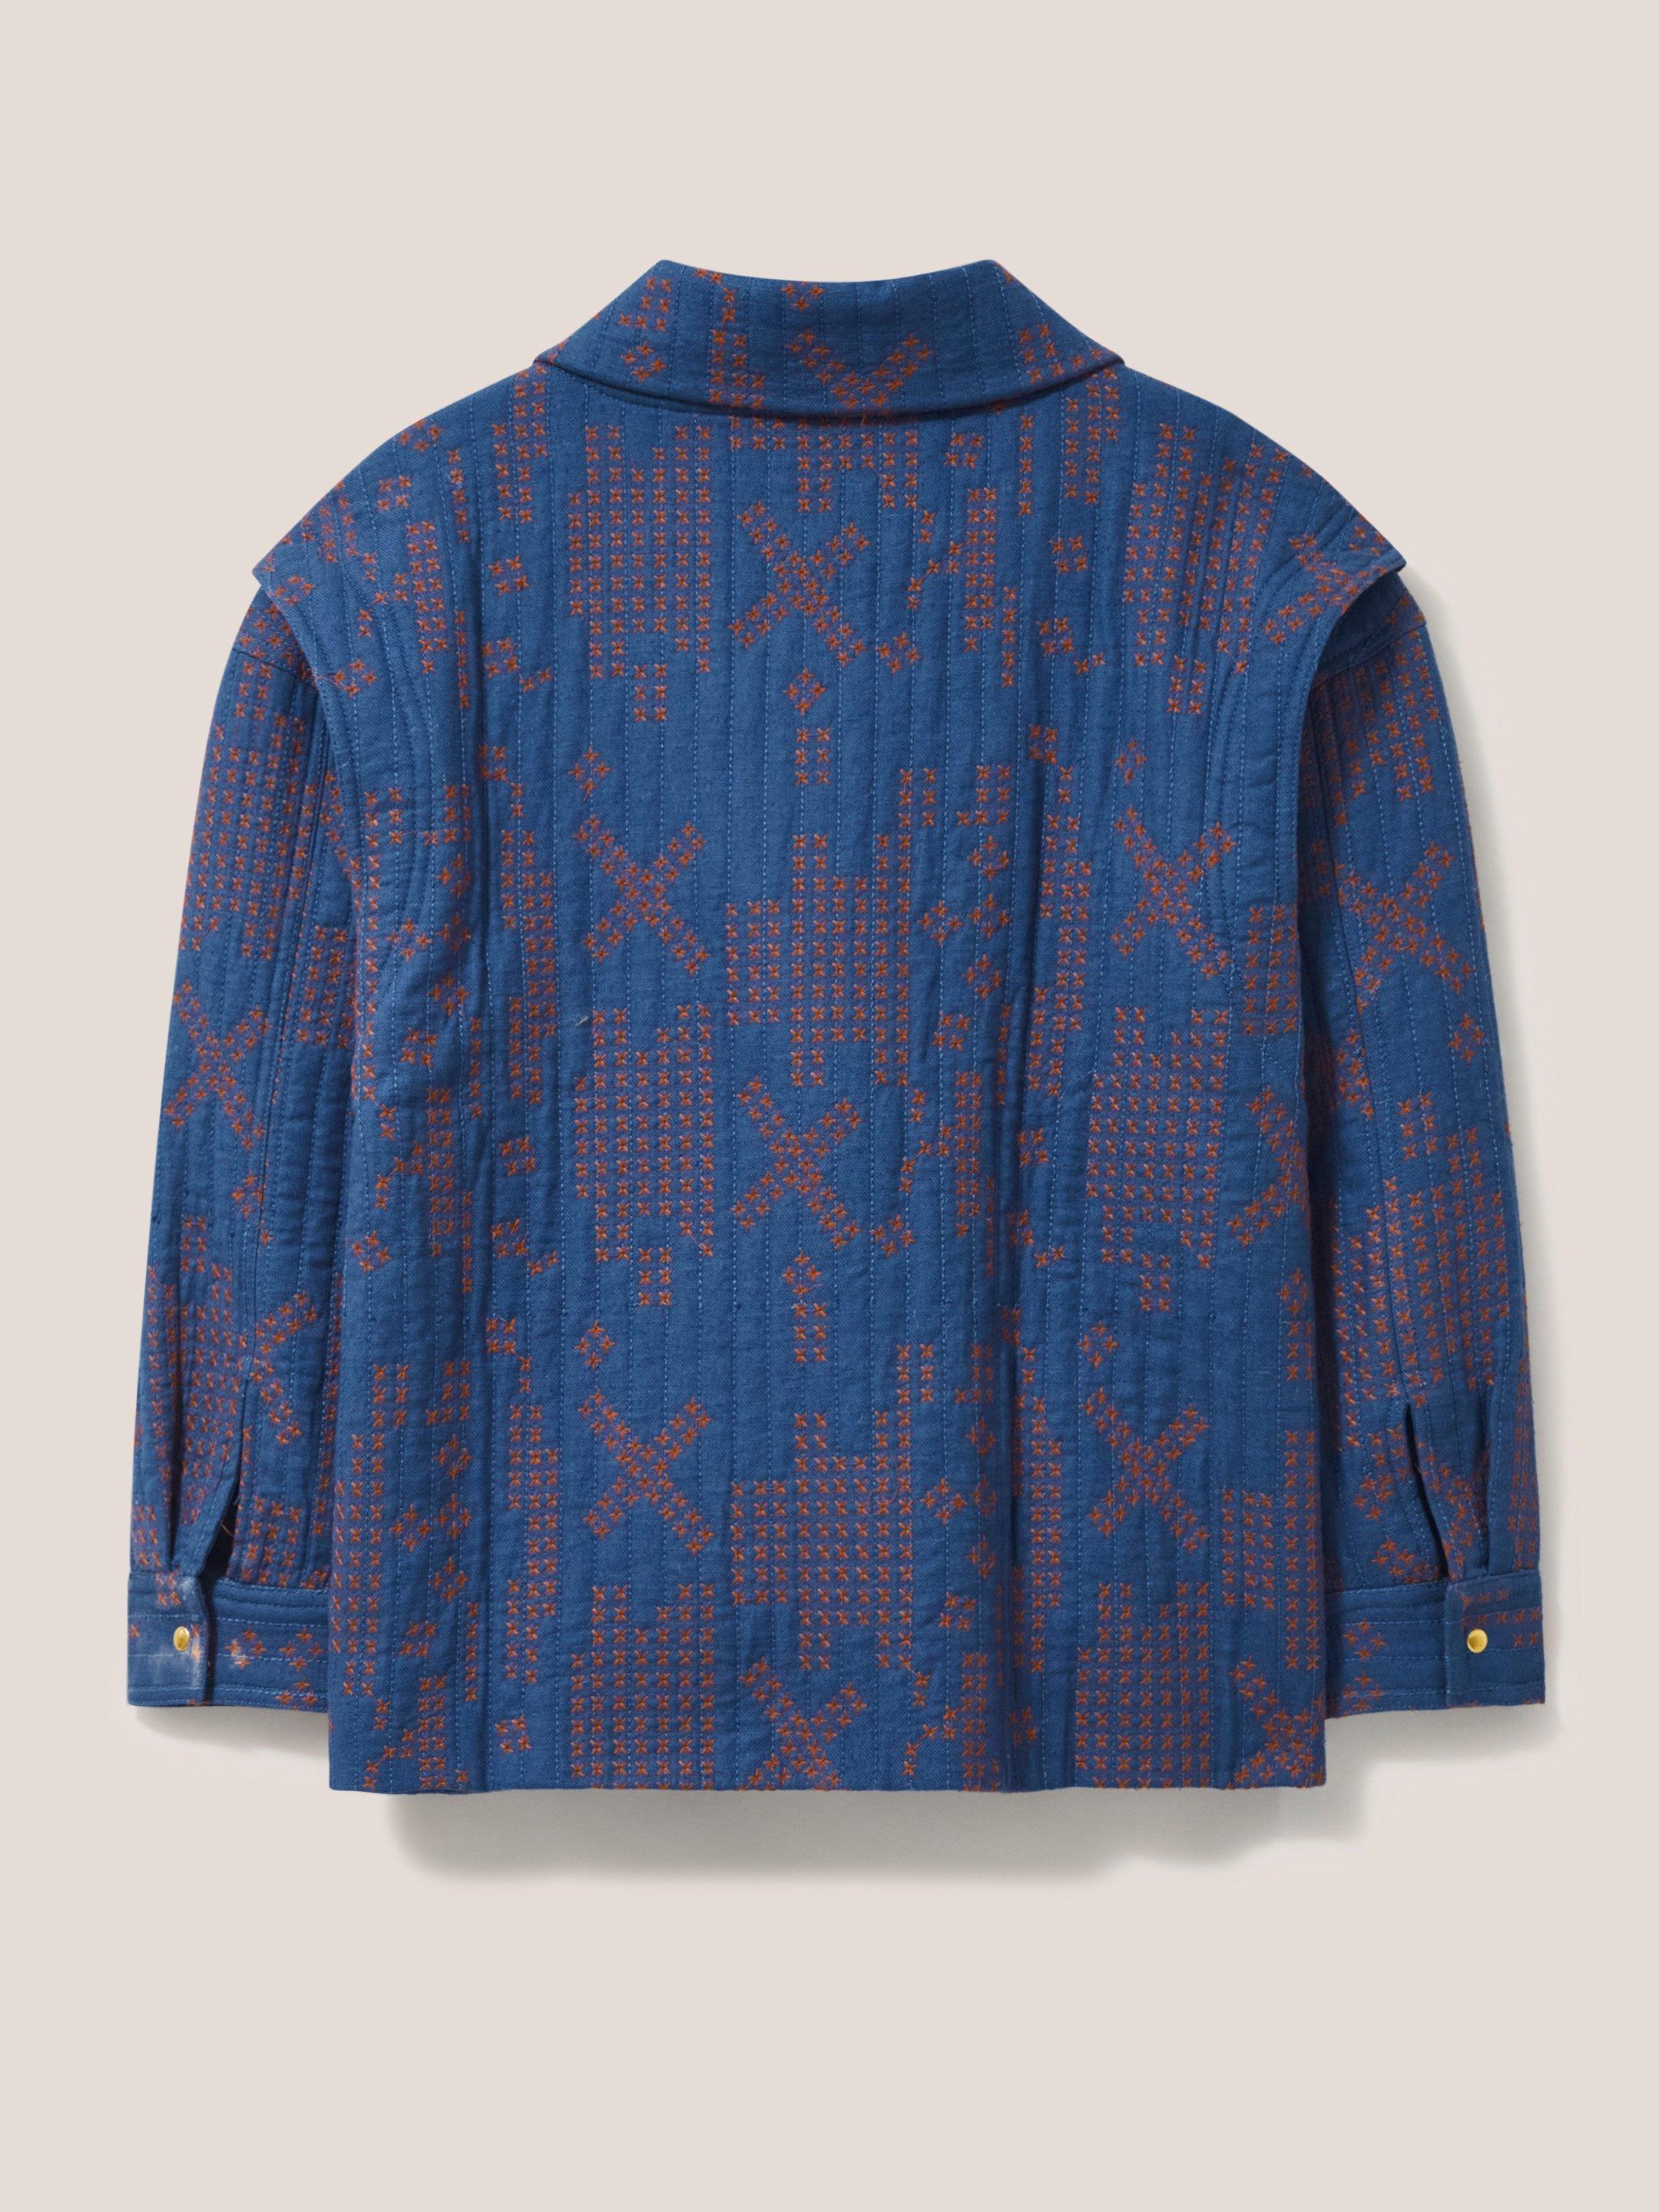 Della Cross Stitch Jacket in BLUE MLT - FLAT BACK